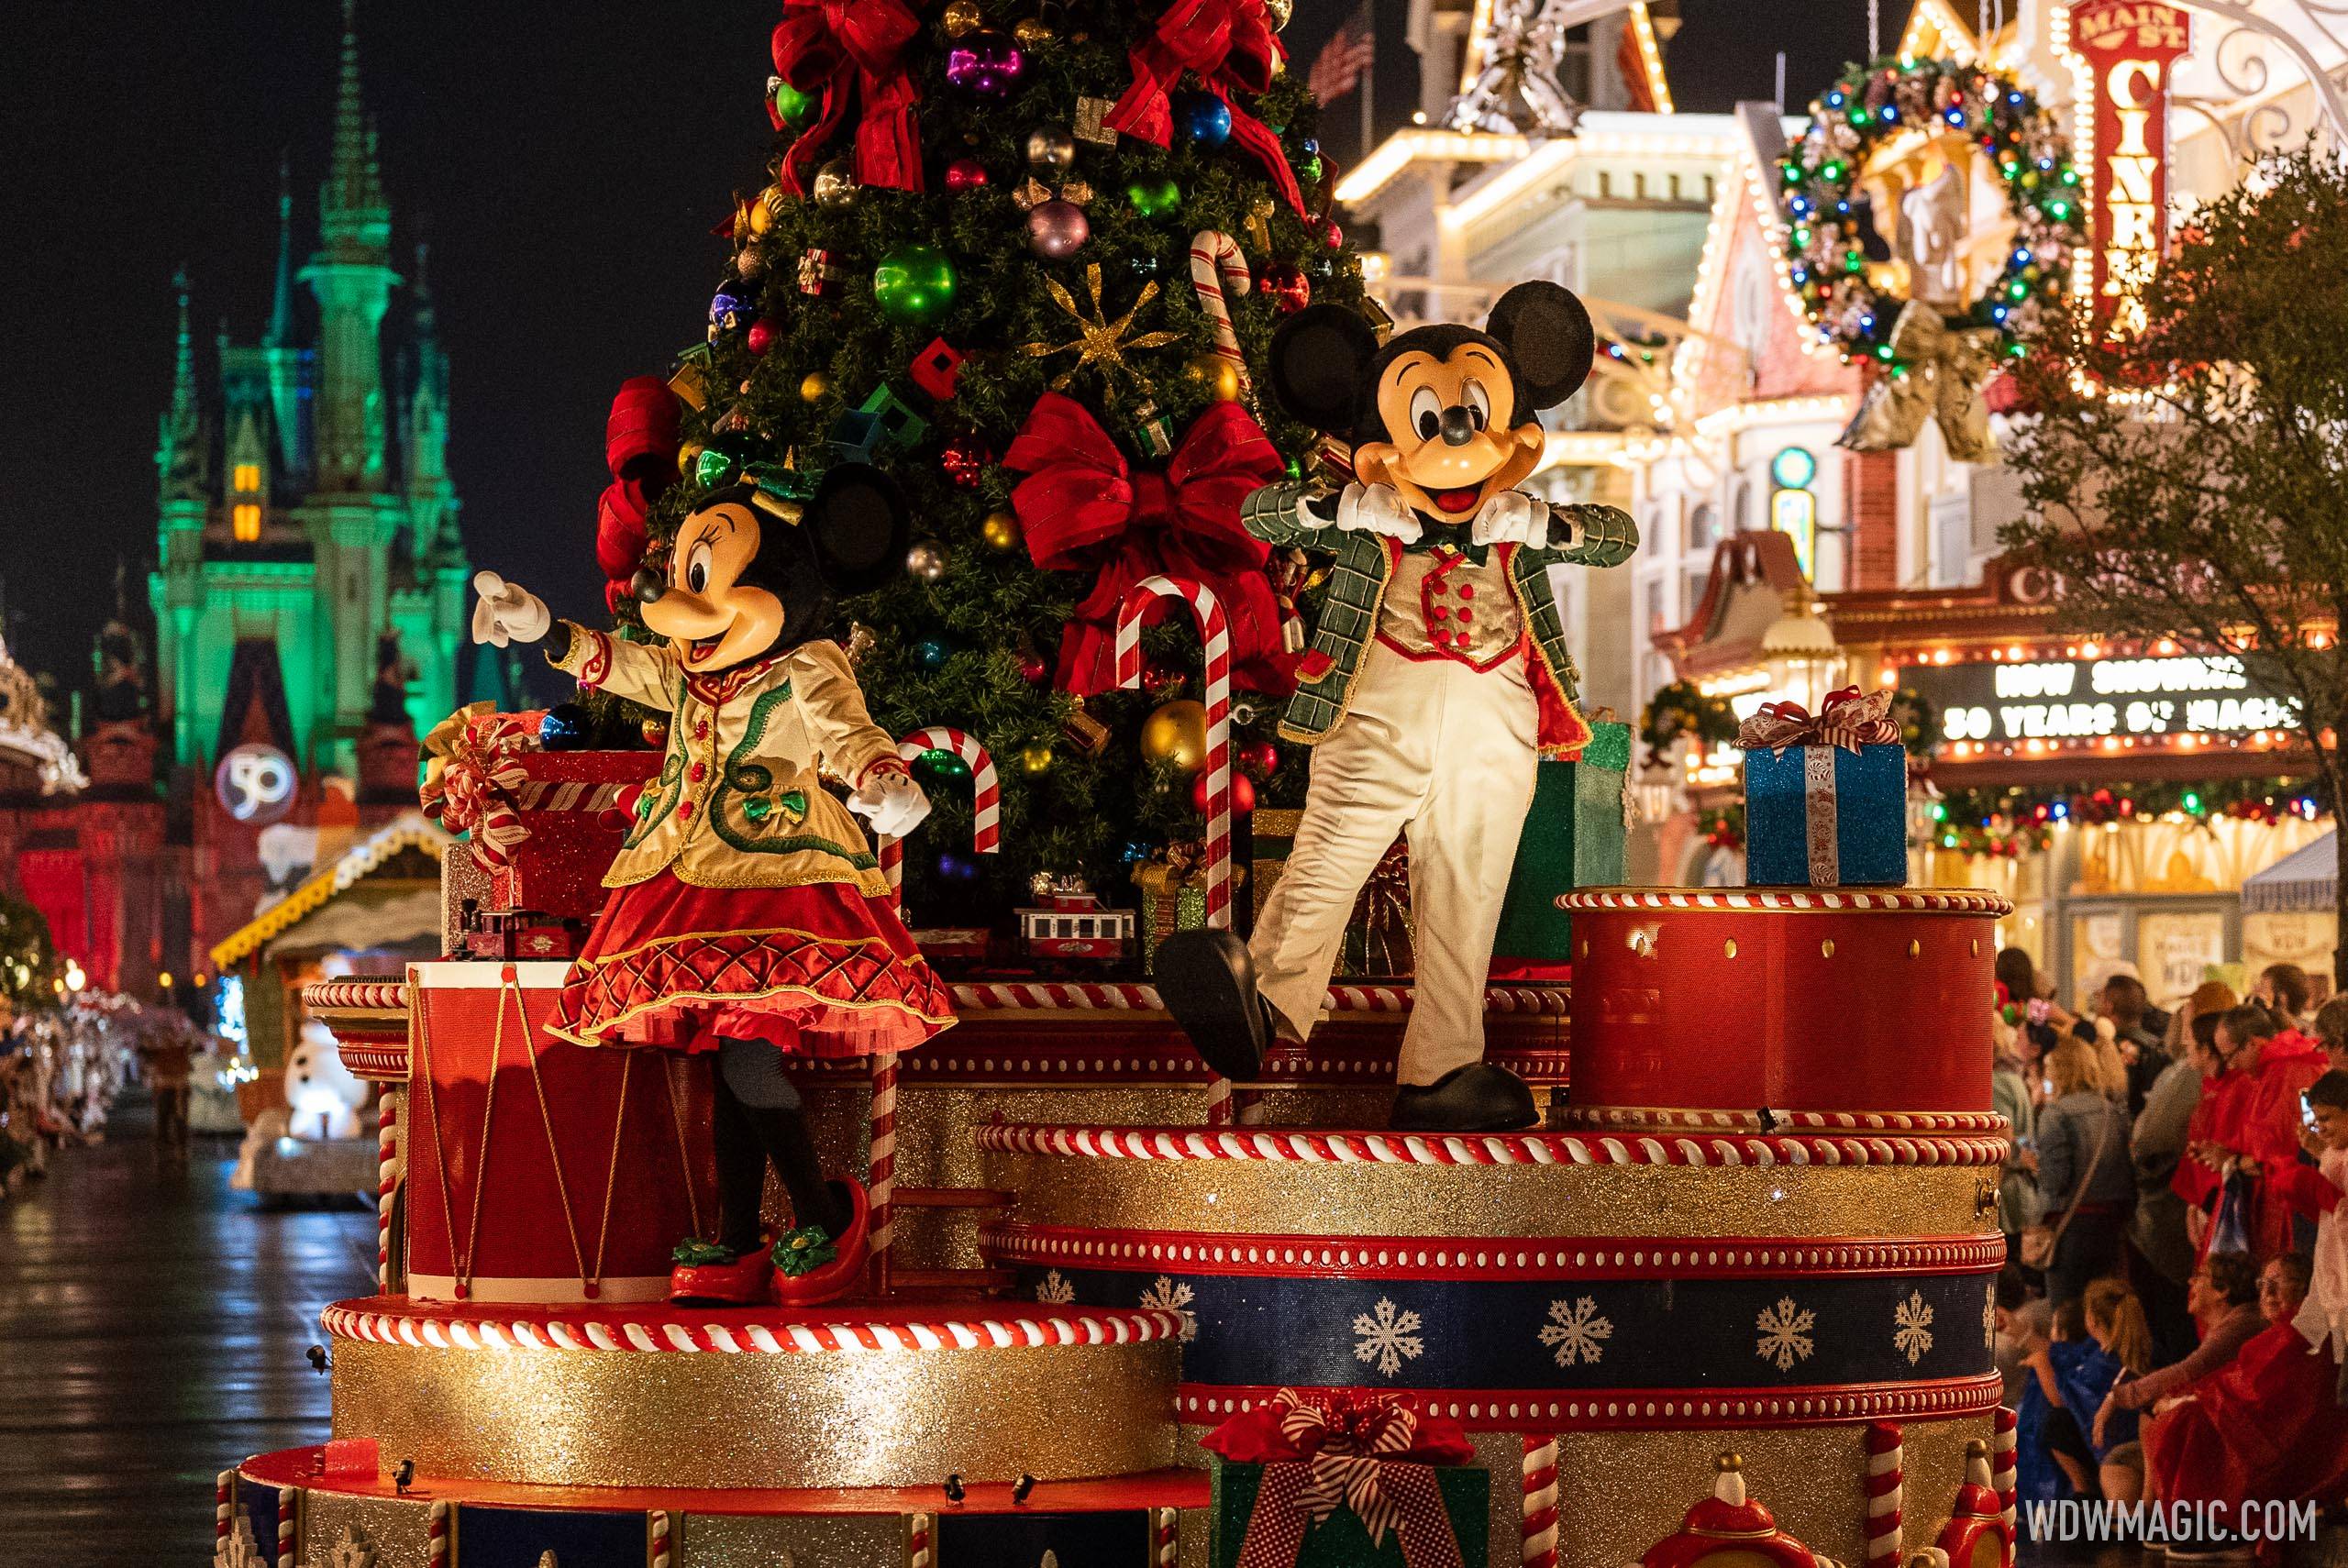 Mickeys-Once-Upon-a-Christmastime-Parade_Full_49255.jpg